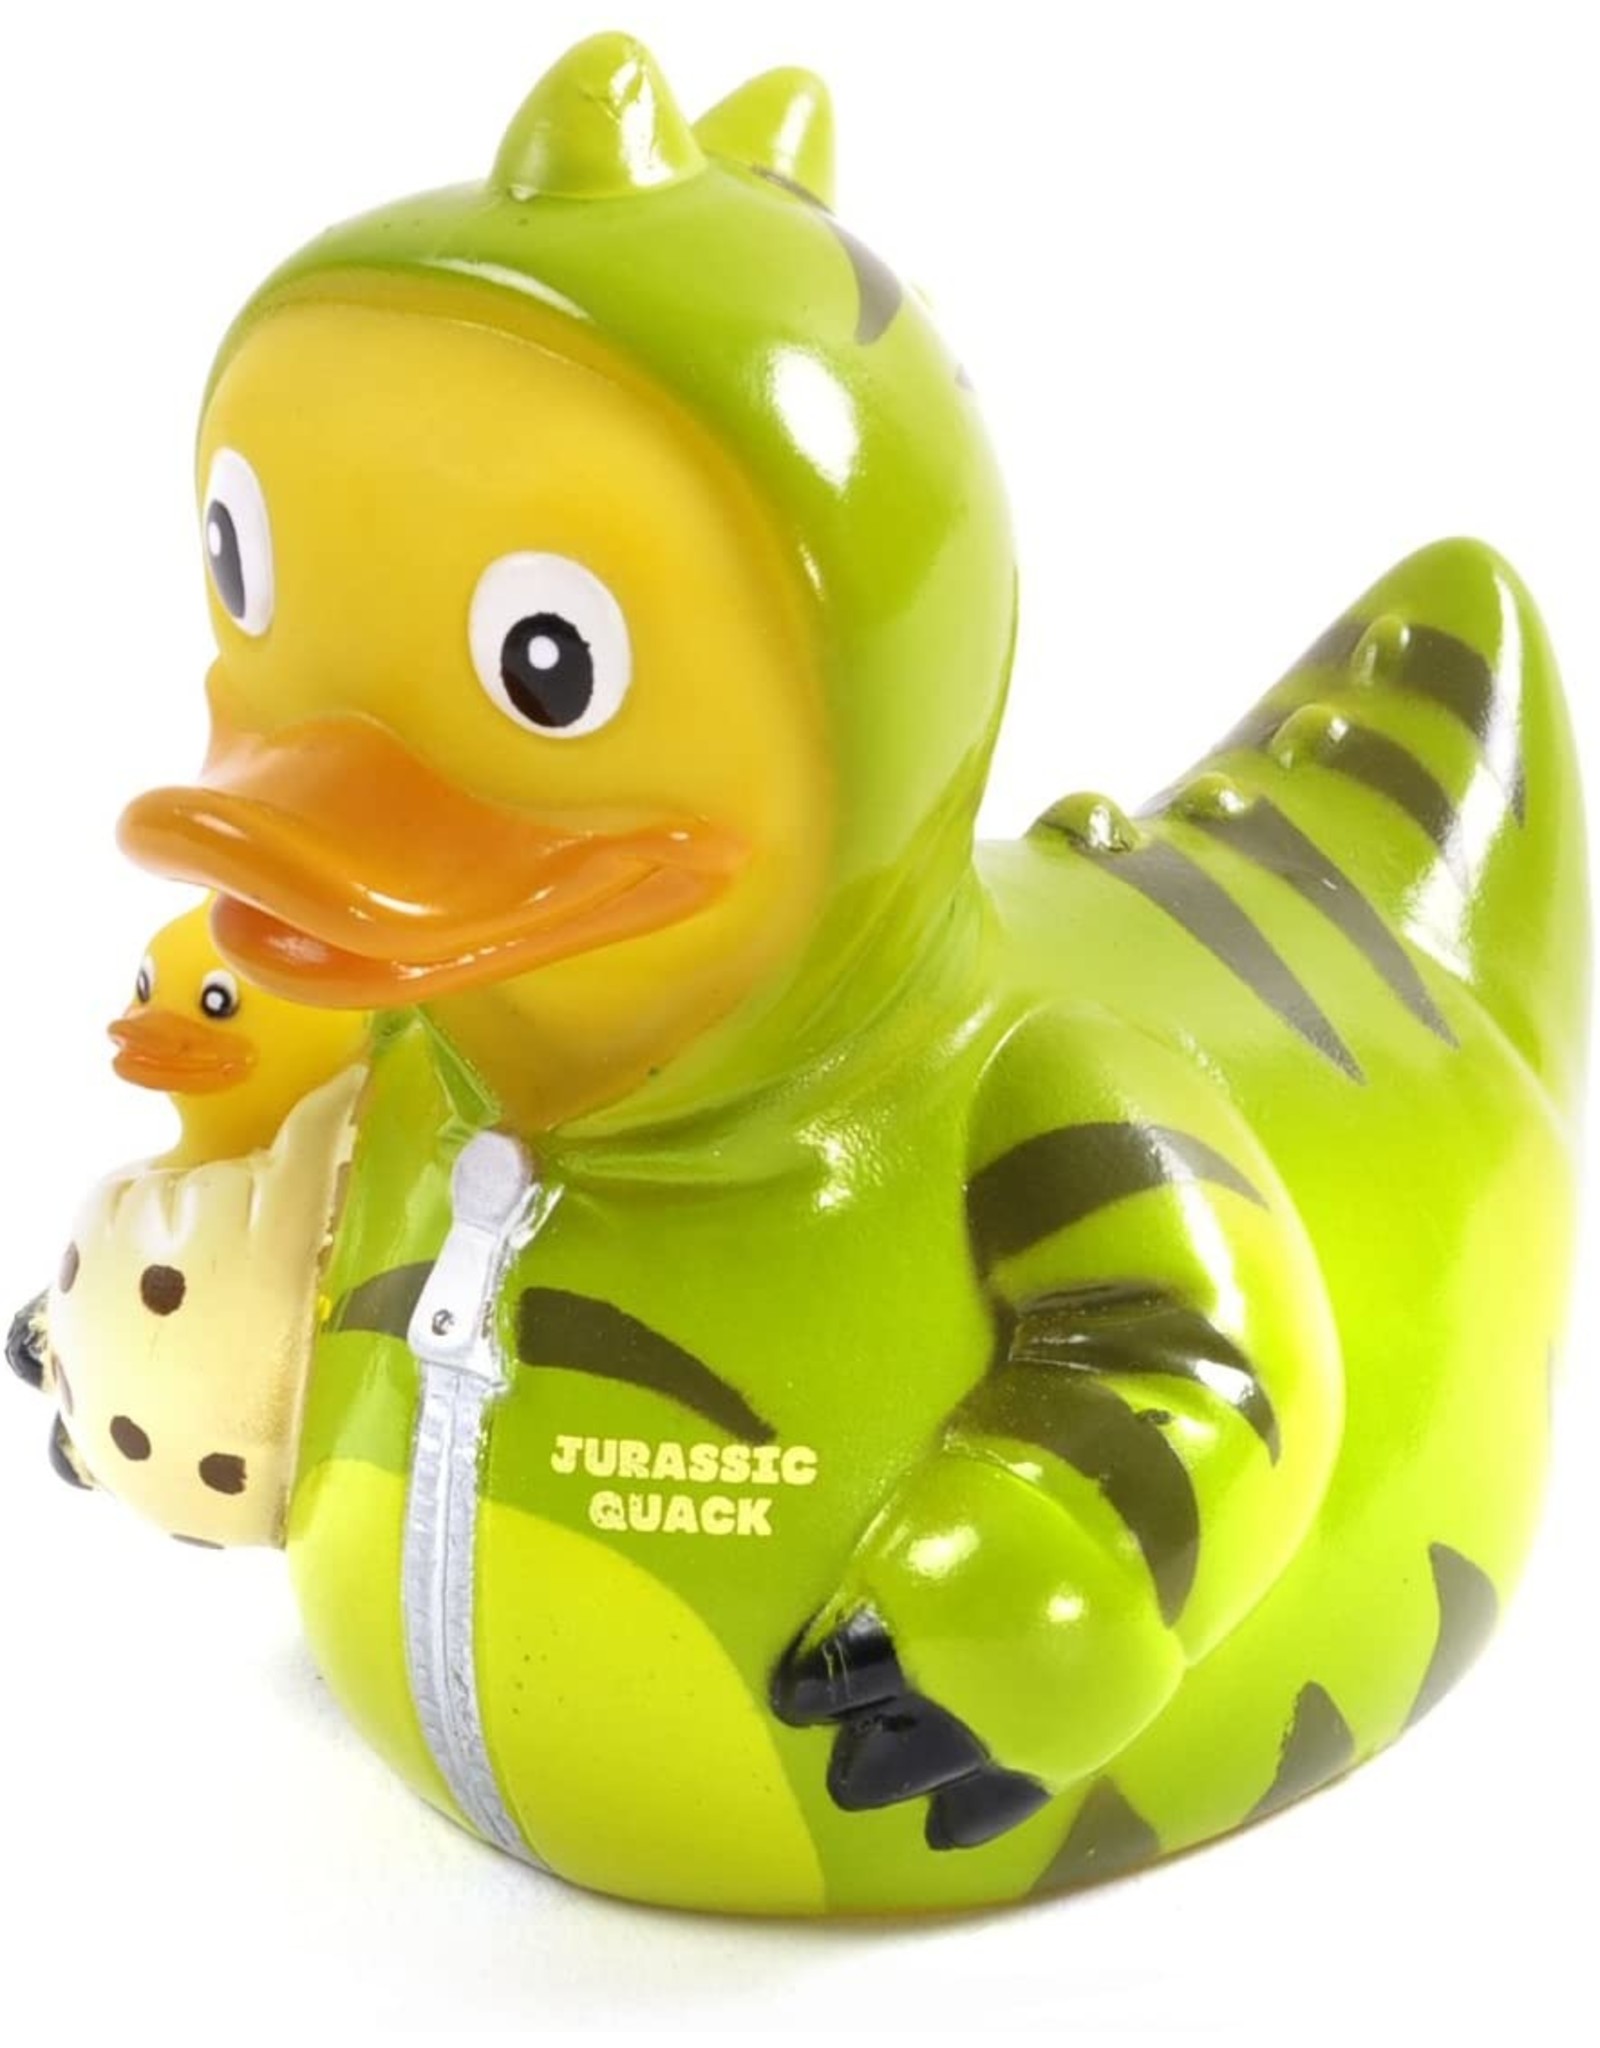 Jurassic Quack Dinosaur Rubber Duck